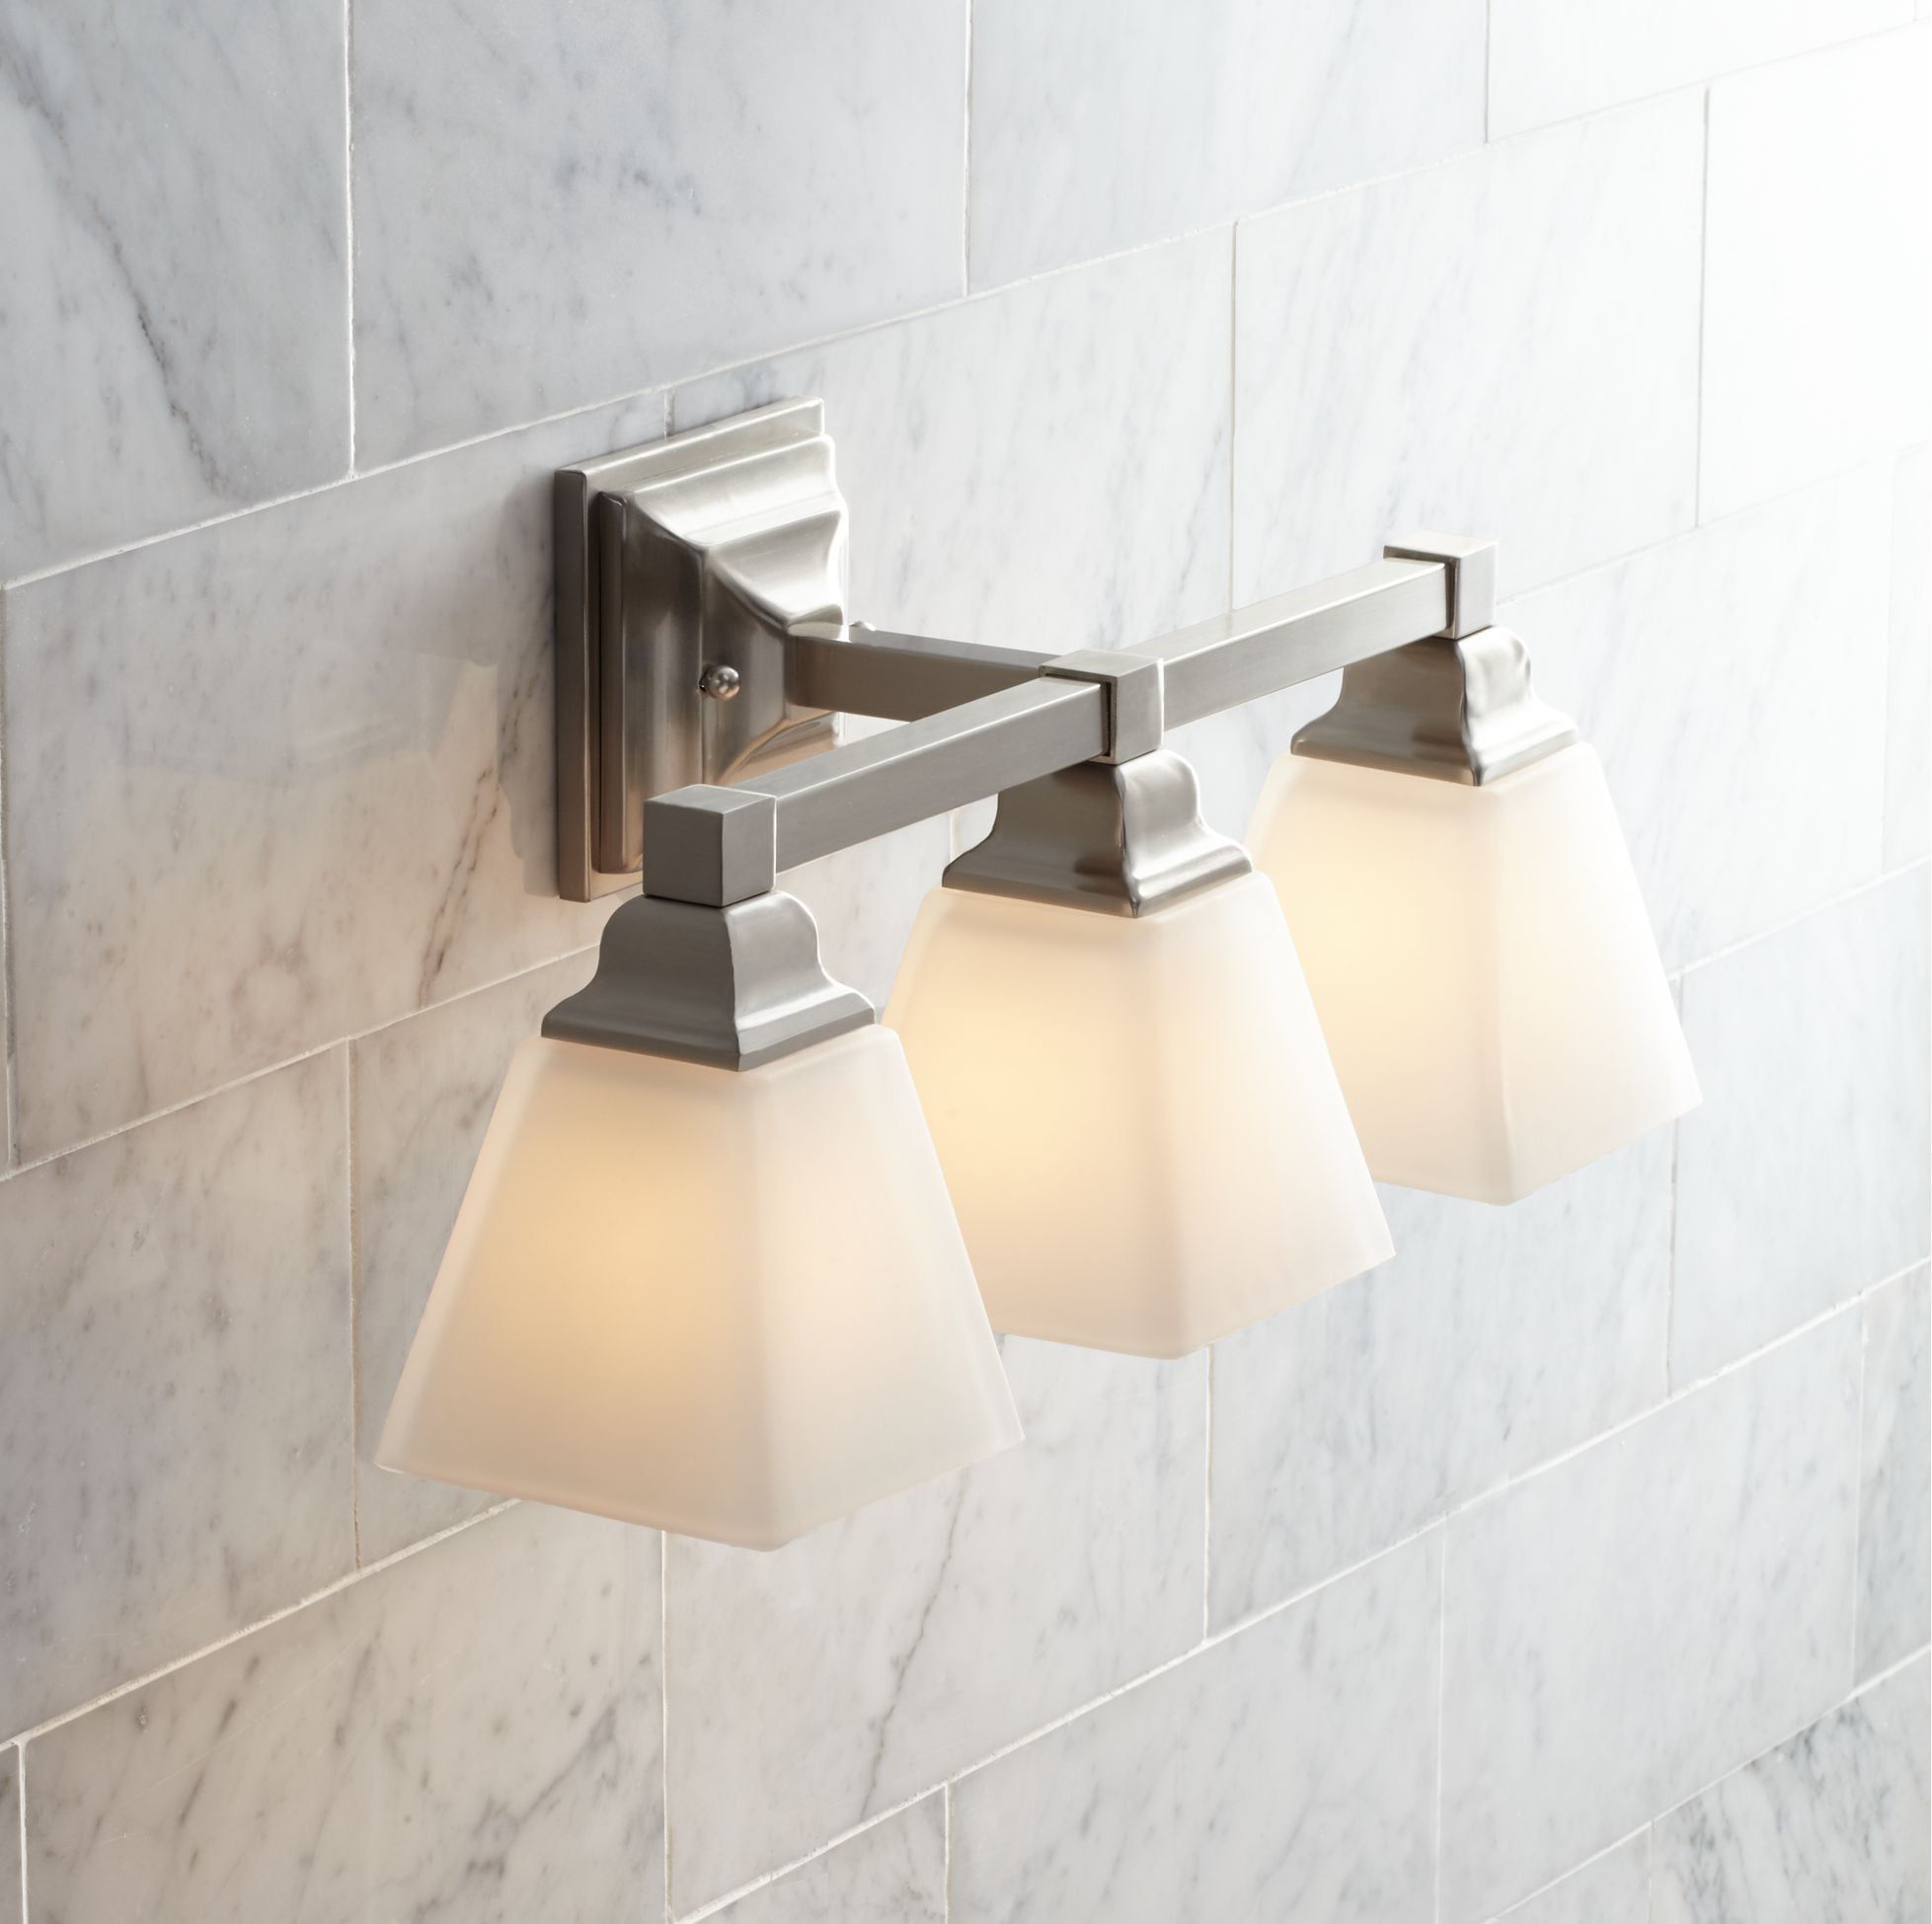 Regency Hill Modern Wall Light Satin, Lamps Plus Bathroom Vanity Light Fixtures